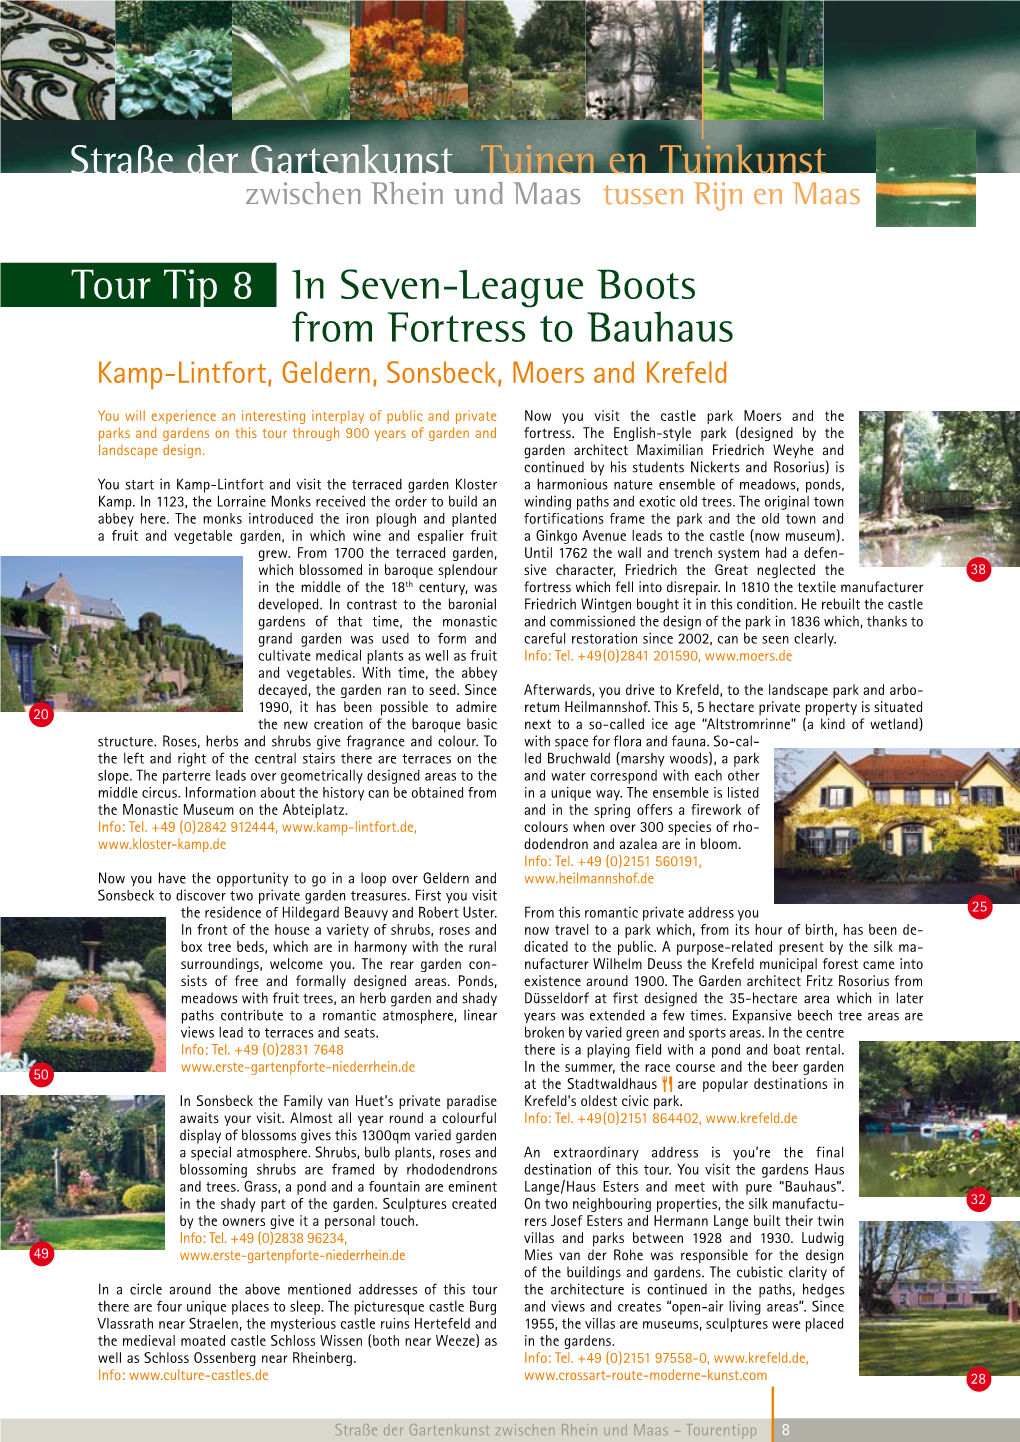 Tour Tip 8 in Seven-League Boots from Fortress to Bauhaus Kamp-Lintfort, Geldern, Sonsbeck, Moers and Krefeld